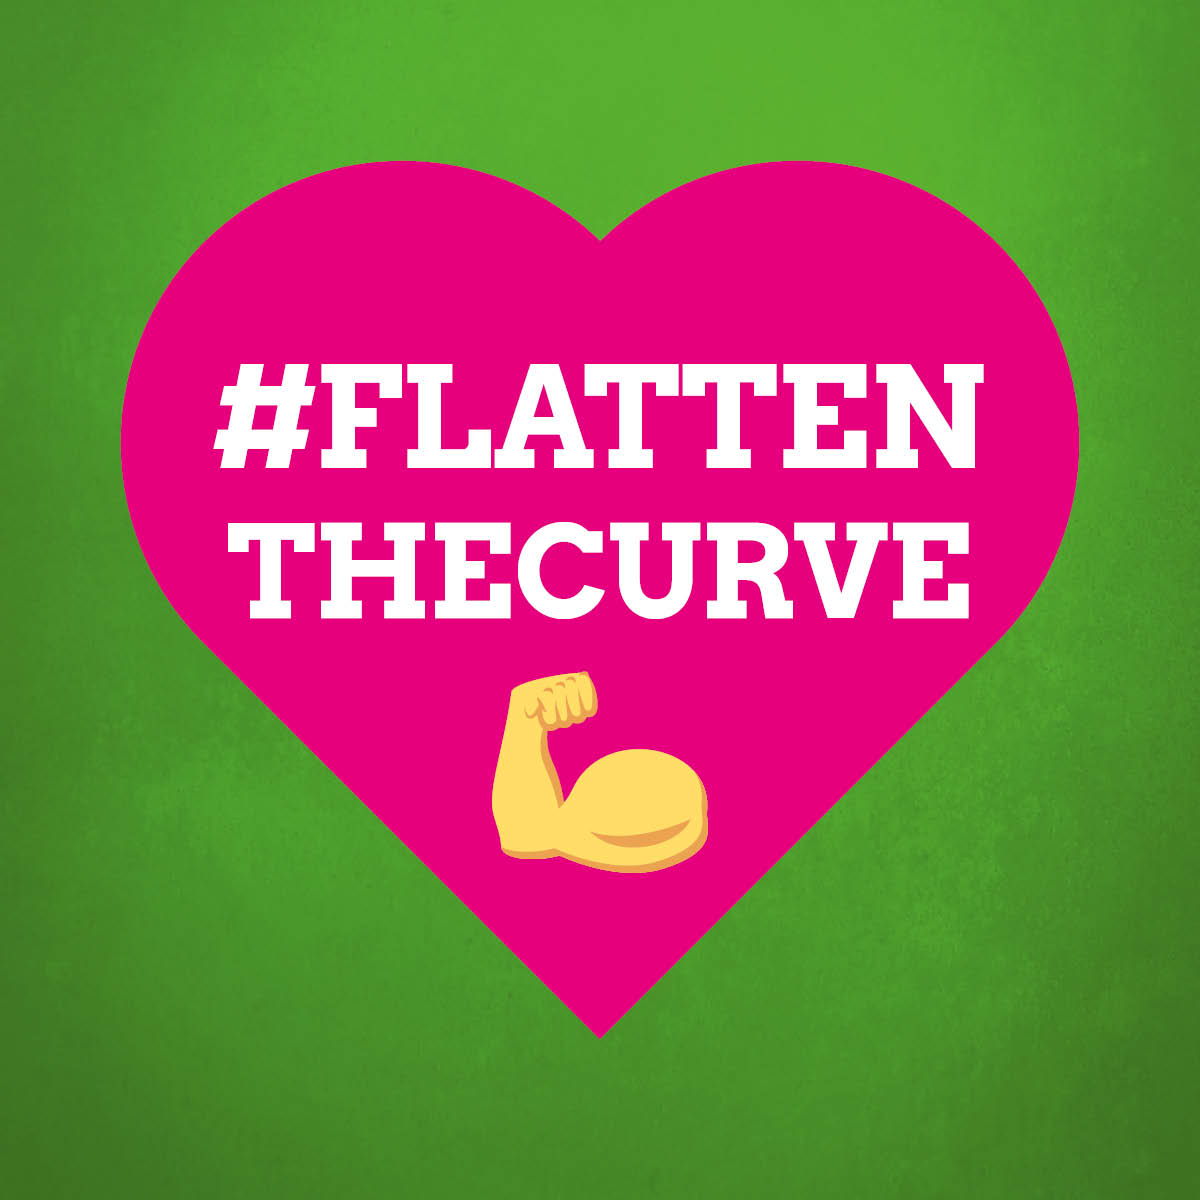 #flattenthecurve